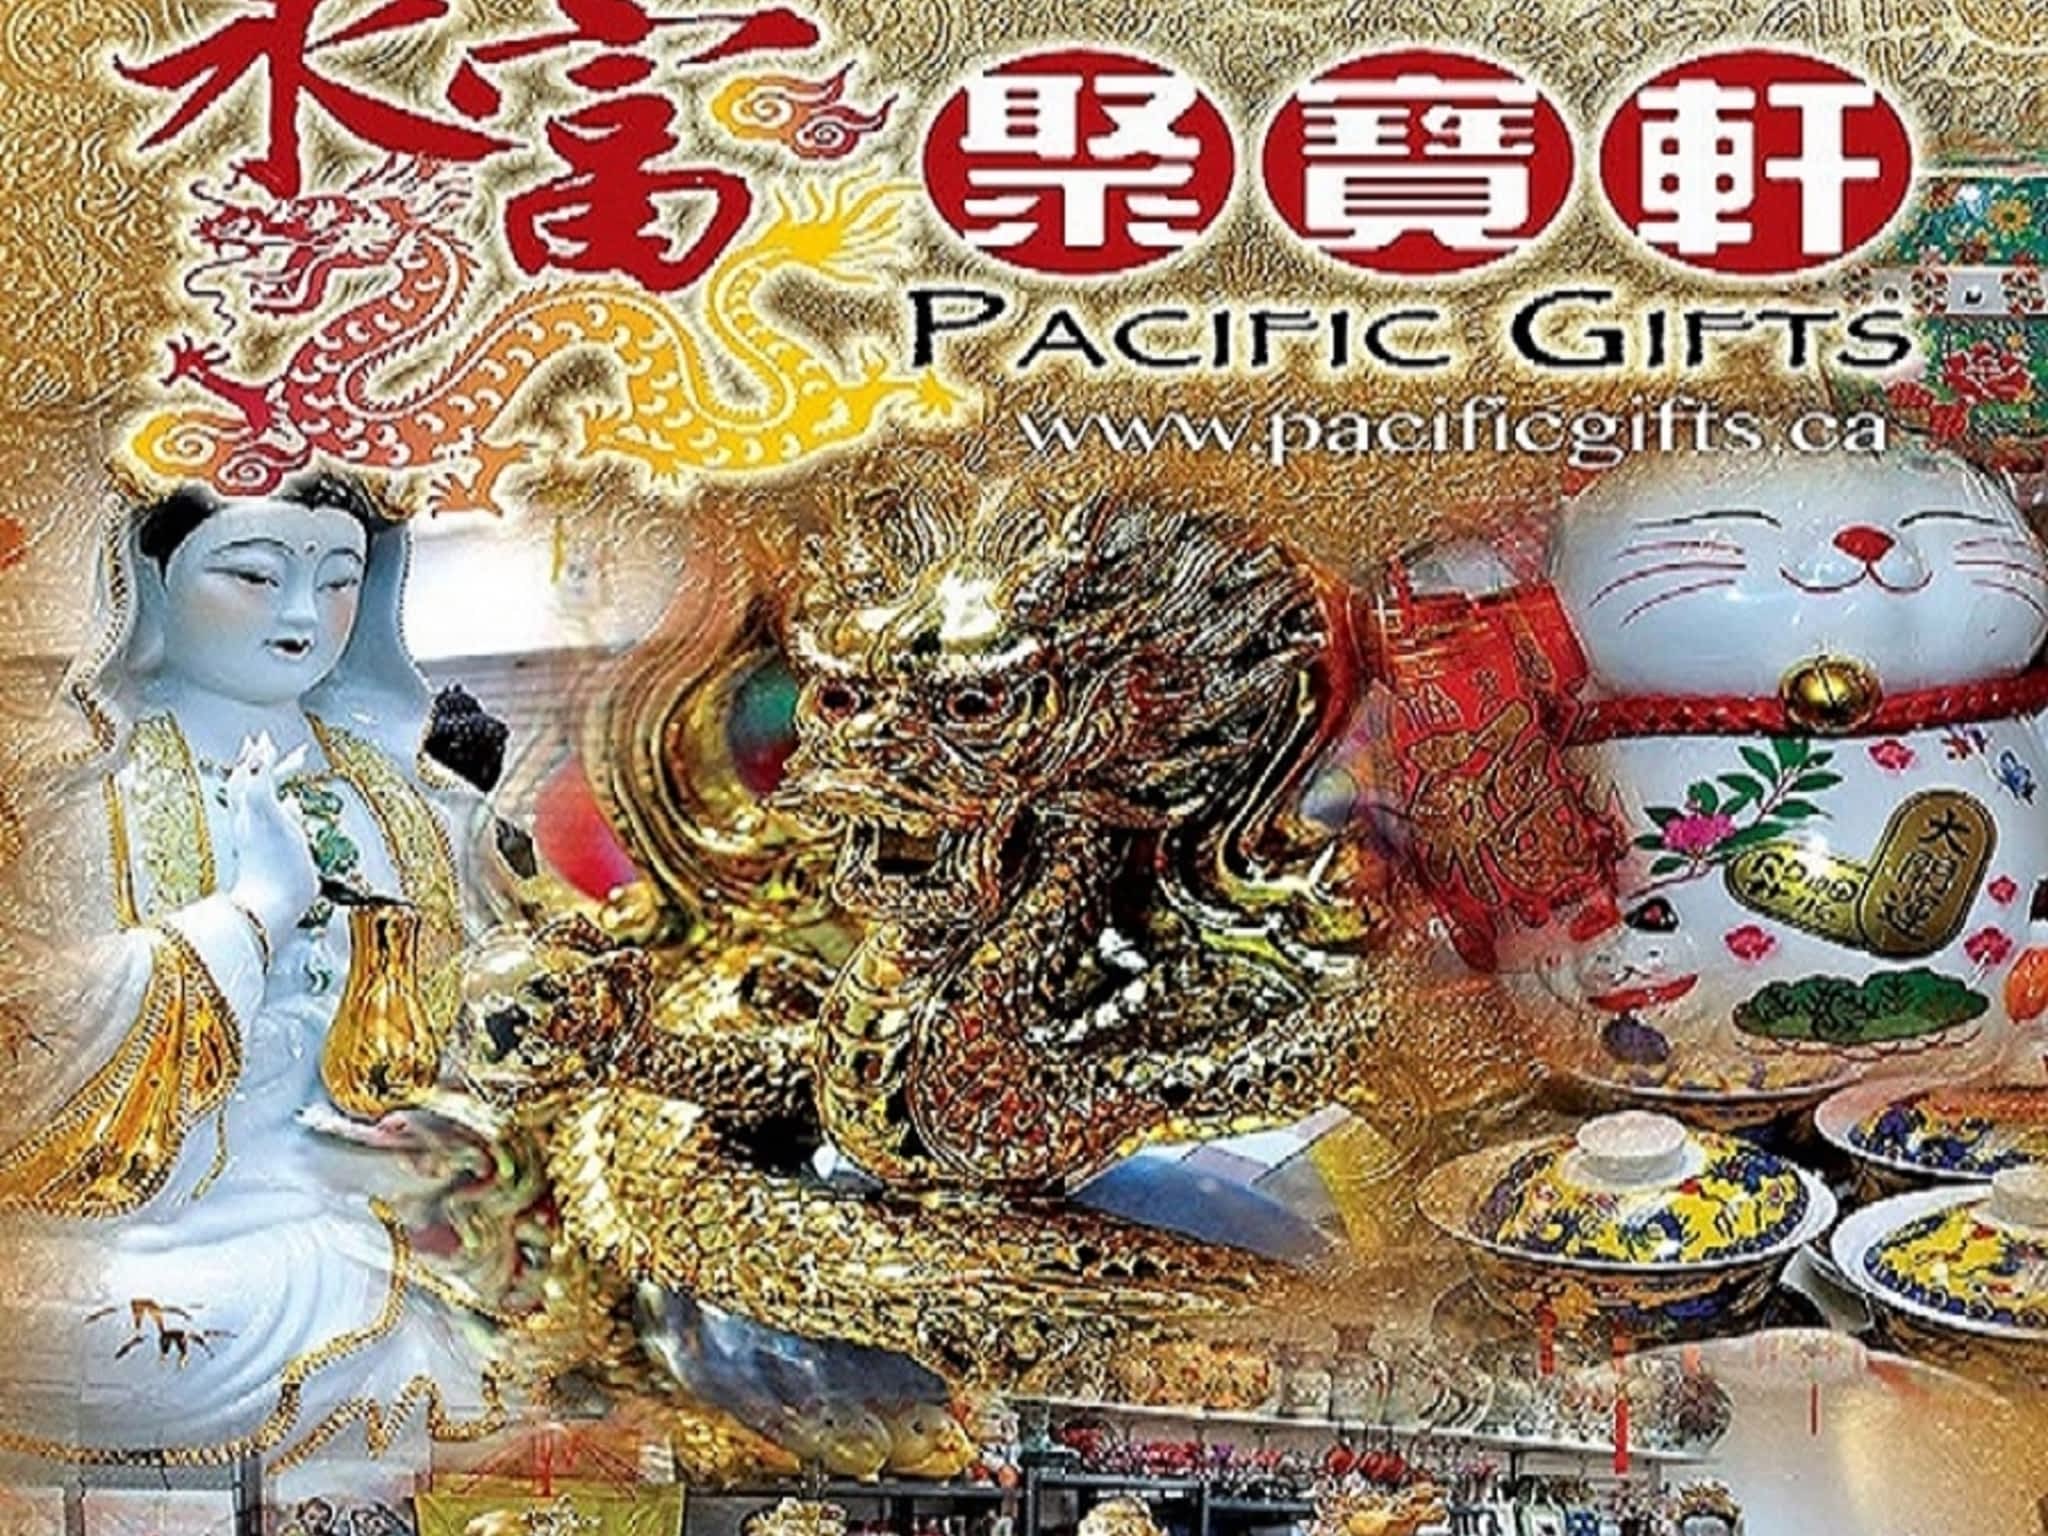 photo Pacific Gift Ltd